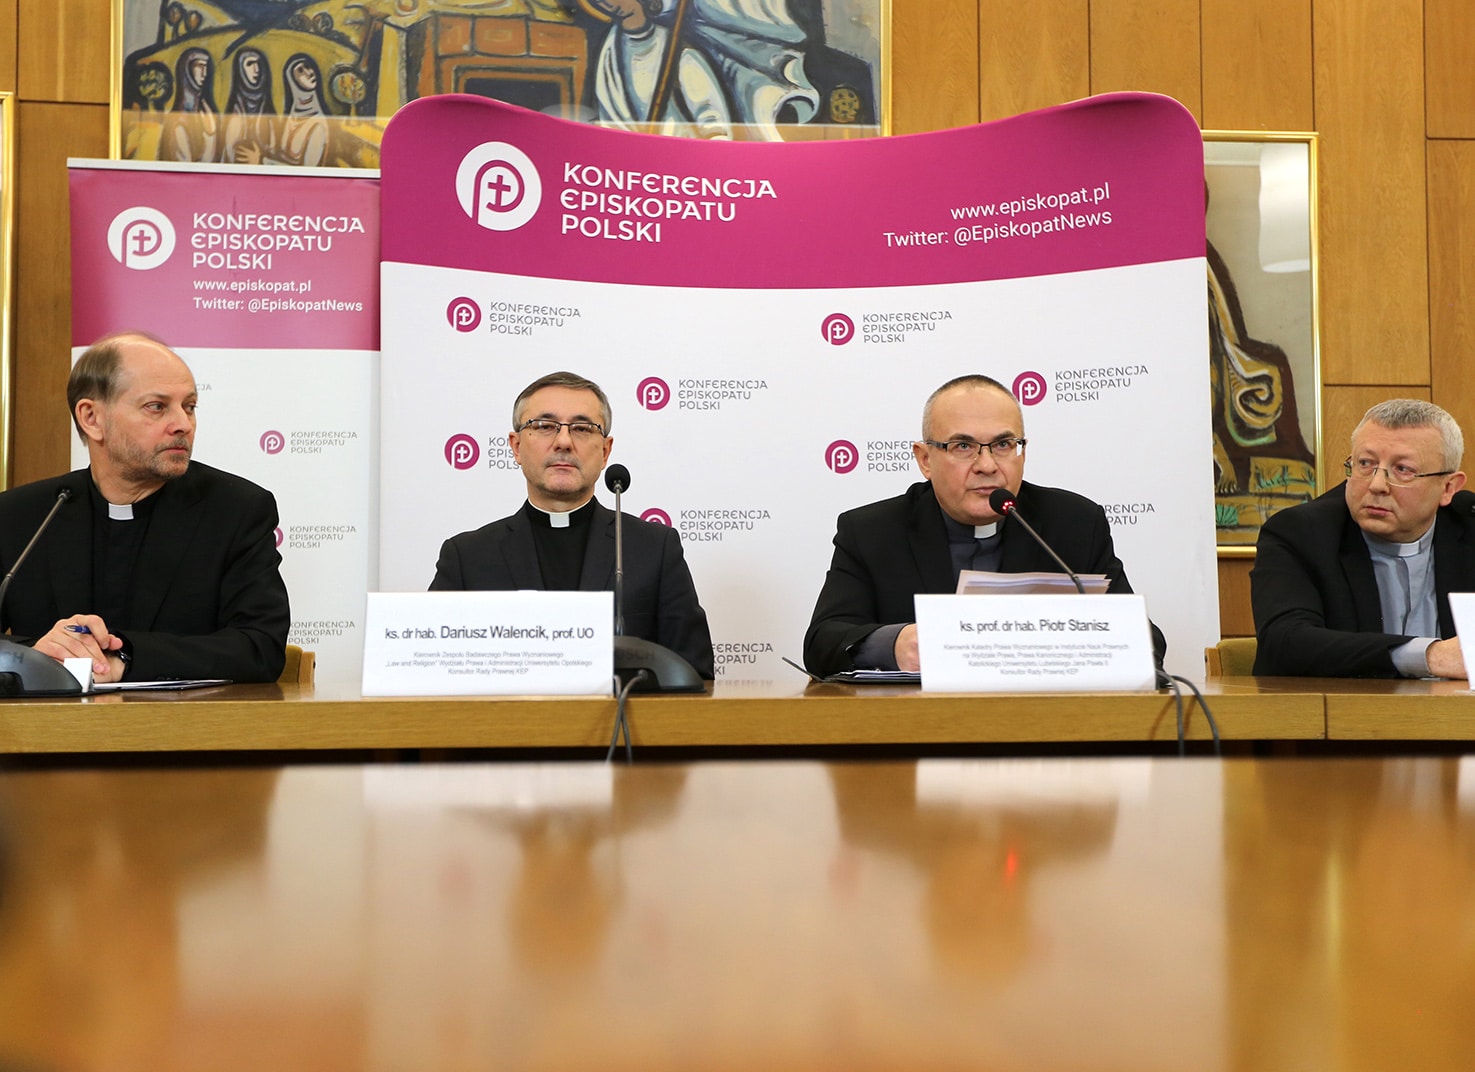 Poland's bishops